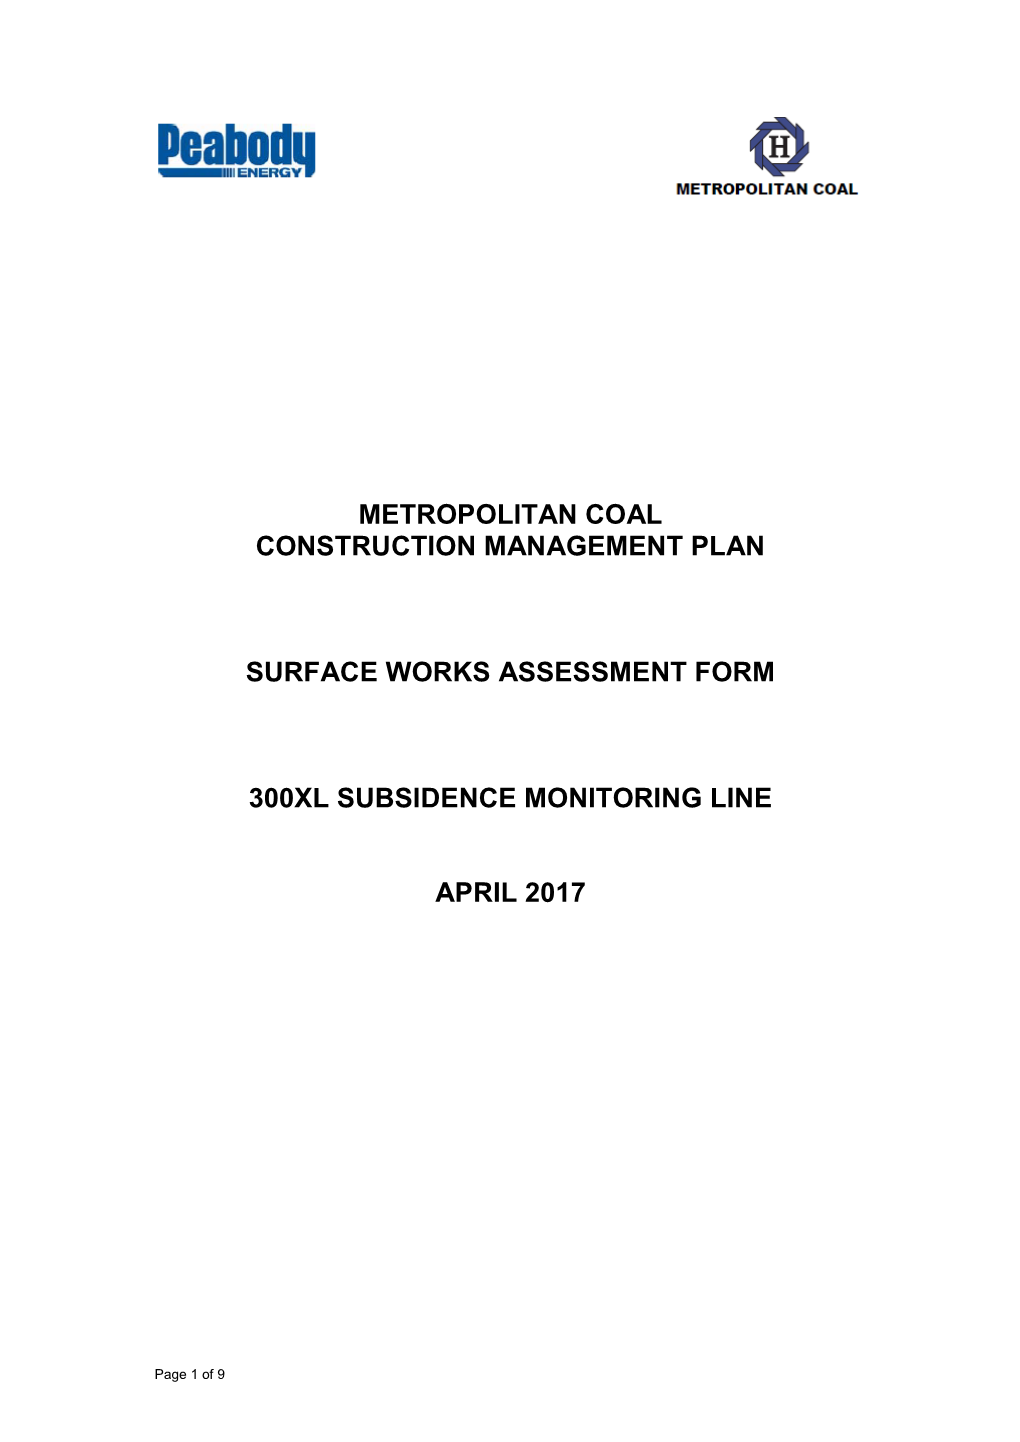 Metropolitan Coal Construction Management Plan Surface Works Assessment Form 300Xl Subsidence Monitoring Line April 2017